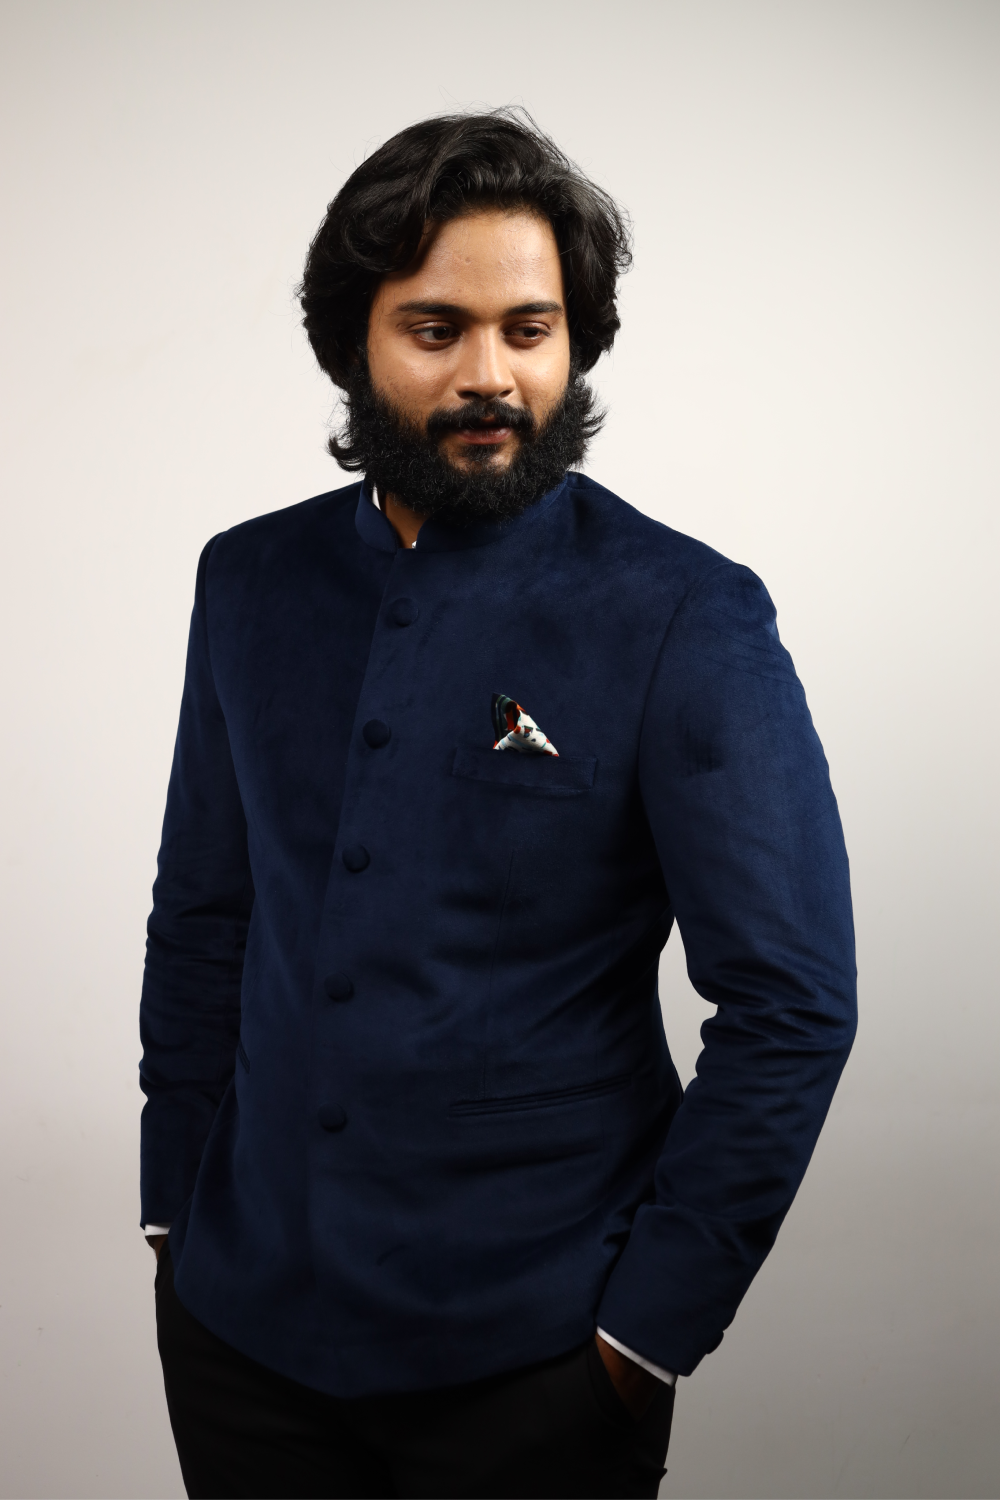 Tuna Blue Textured Premium Cotton Bandhgala/Jodhpuri Suits for Men.